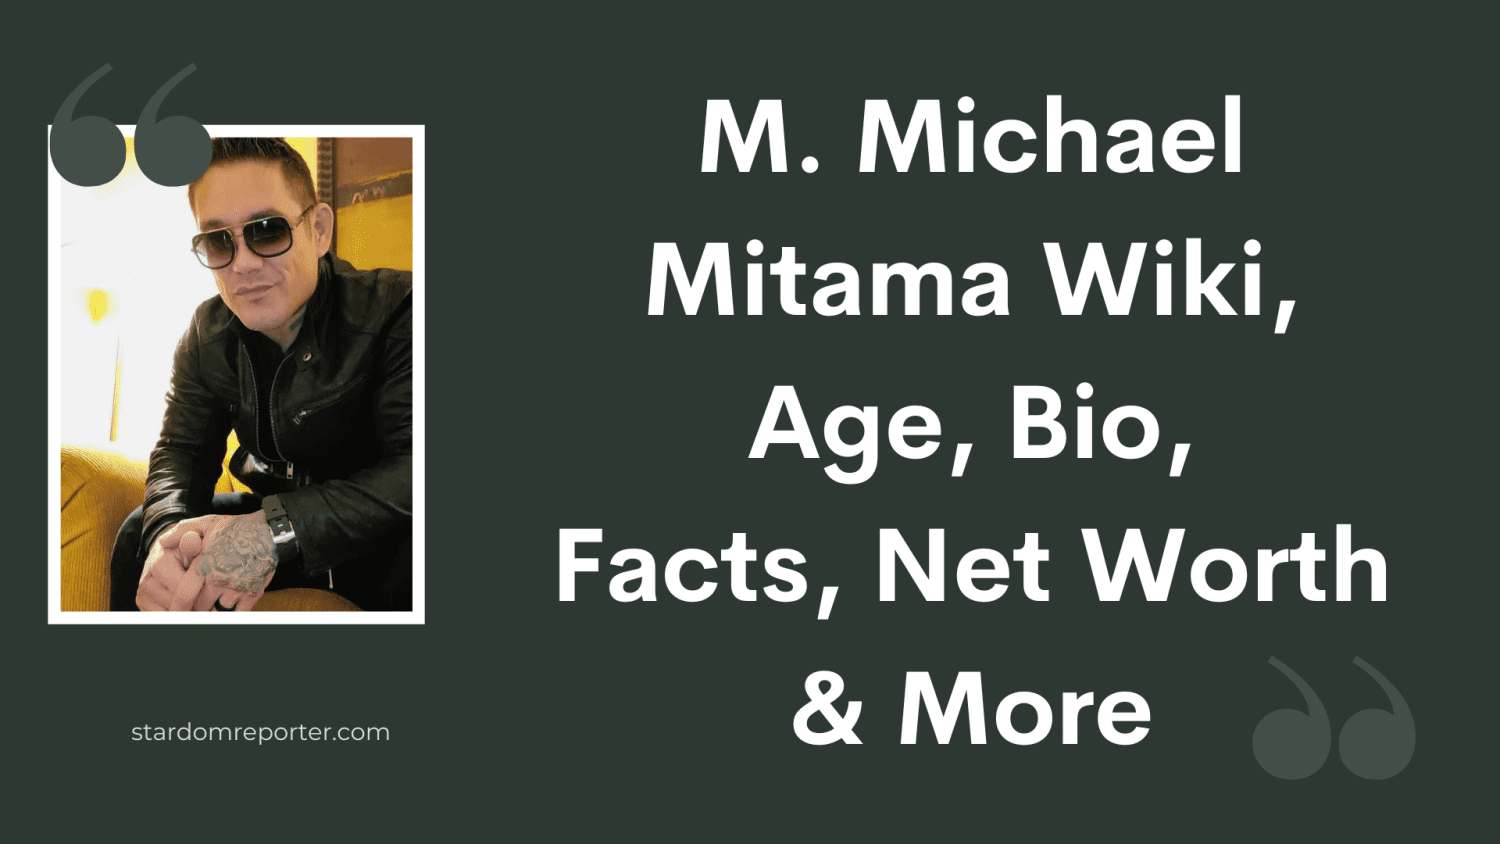 M. Michael Mitama Wiki, Age, Bio, Facts, Net Worth & More - 55